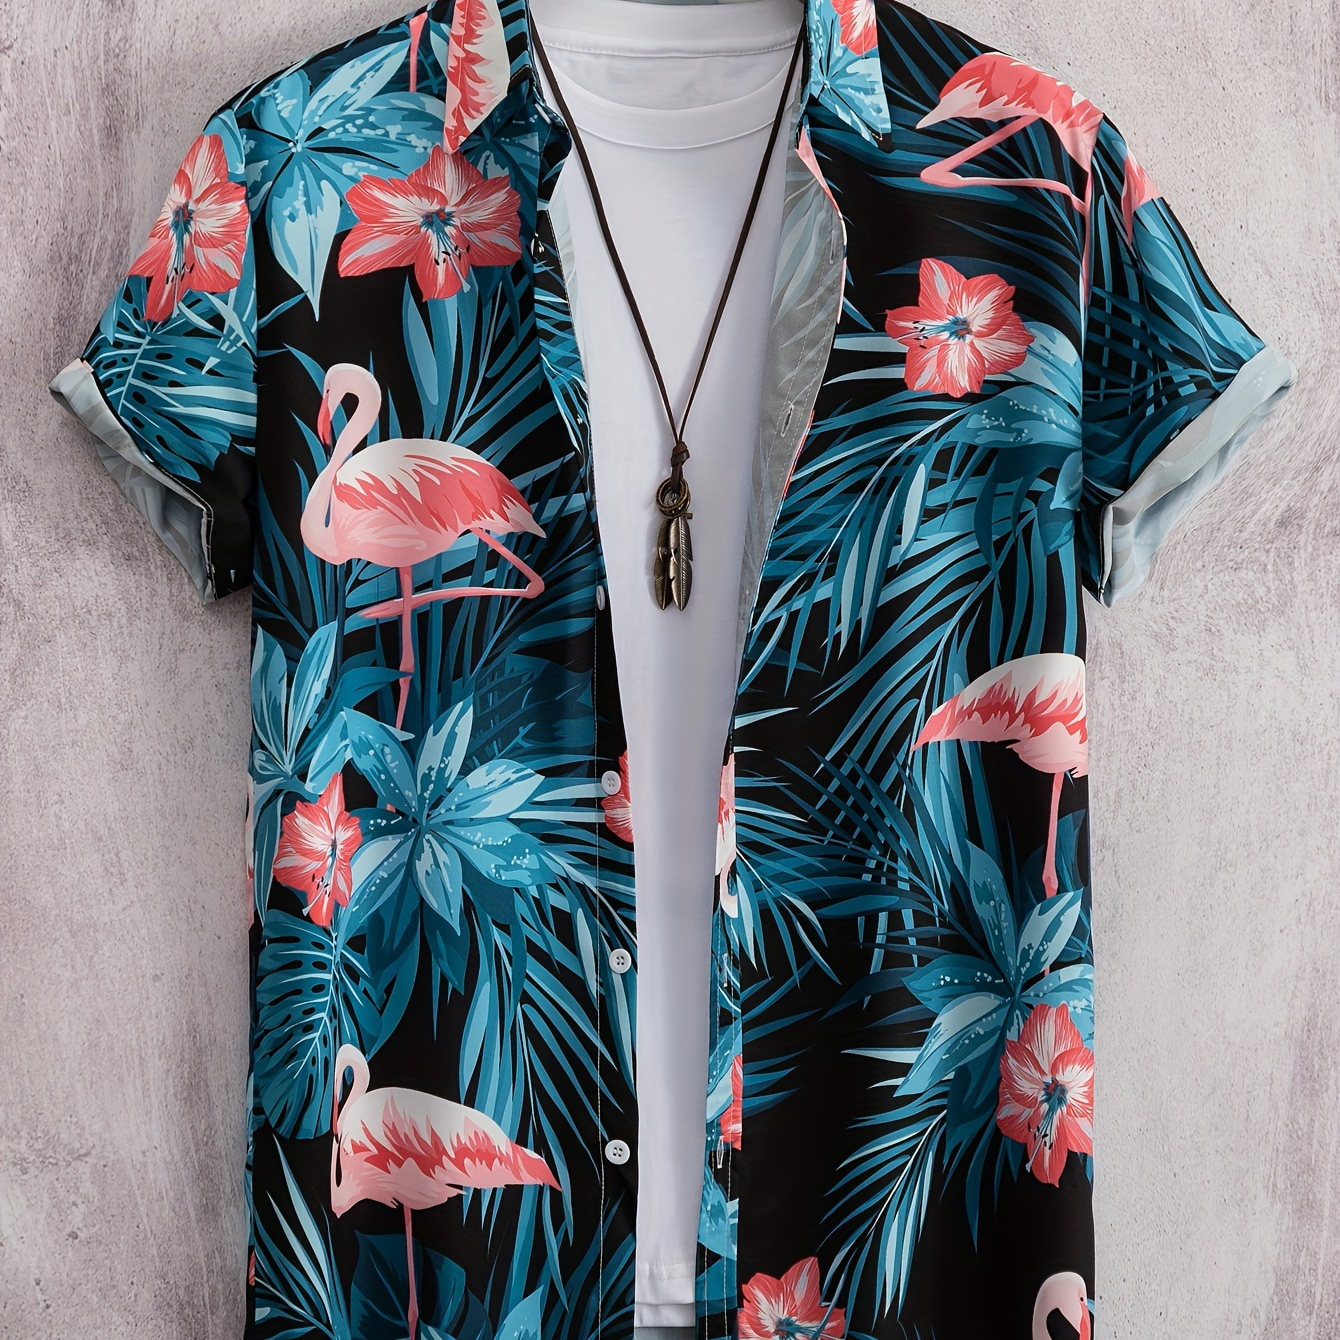 

Men's Flamingo Graphic Print Shirt, Casual Lapel Button Up Short Sleeve Shirt For Summer Outdoor Activities